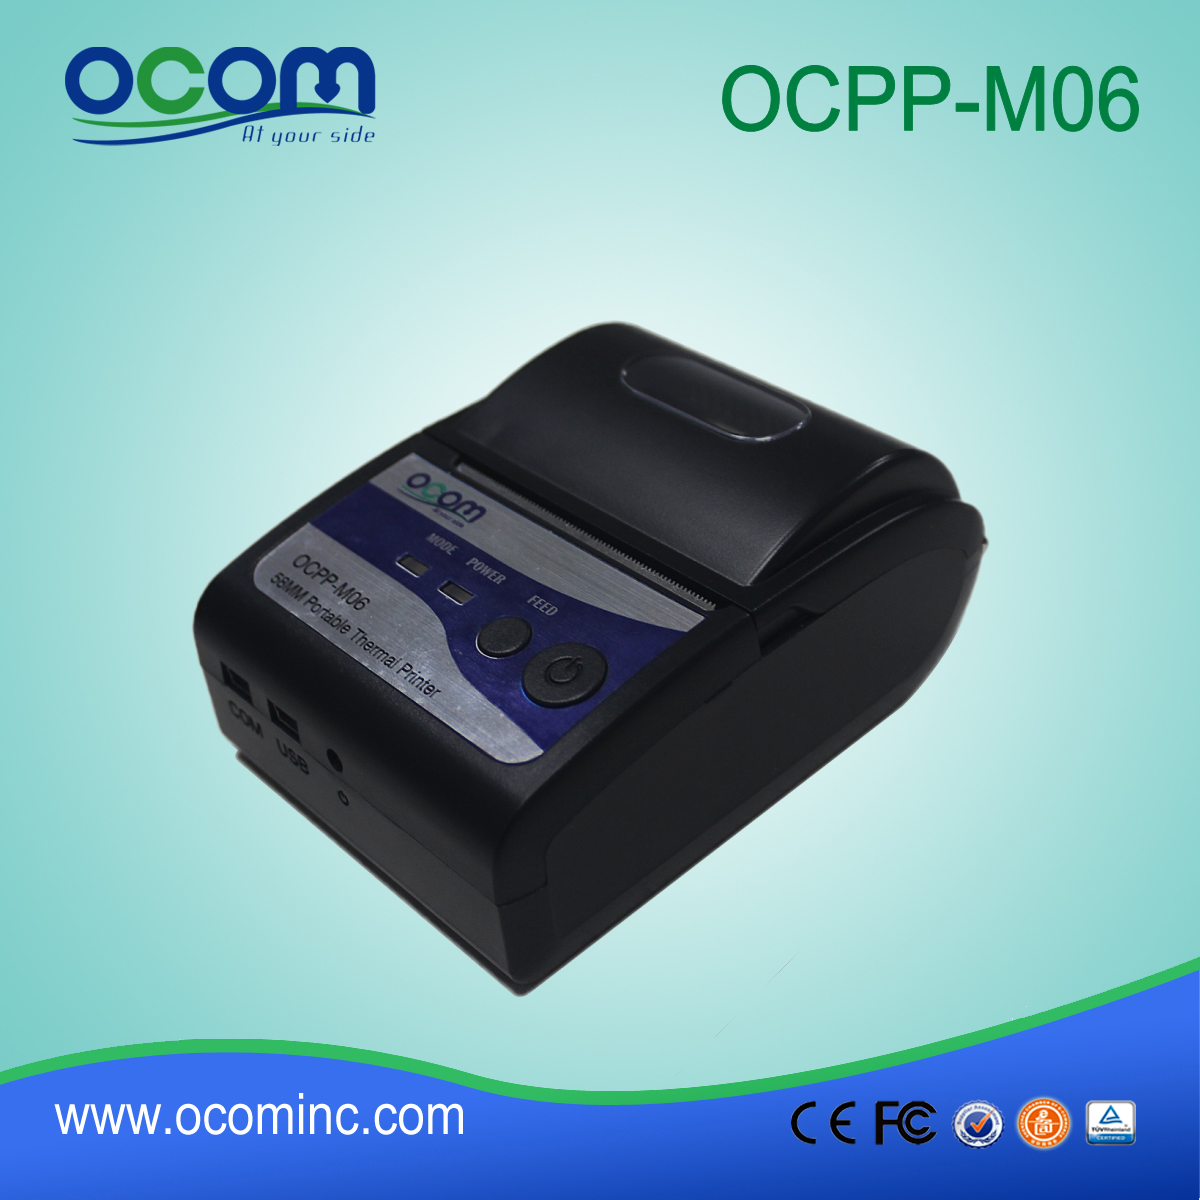 OCPP-M06: China Fabrik 58mm Bluetooth-Drucker, Bluetooth-Drucker POS